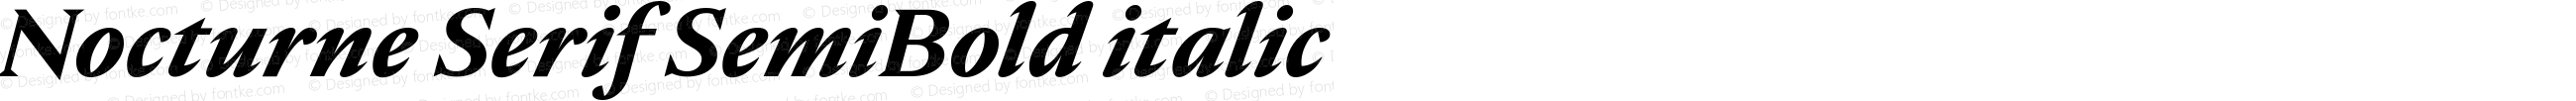 Nocturne Serif SemiBold italic